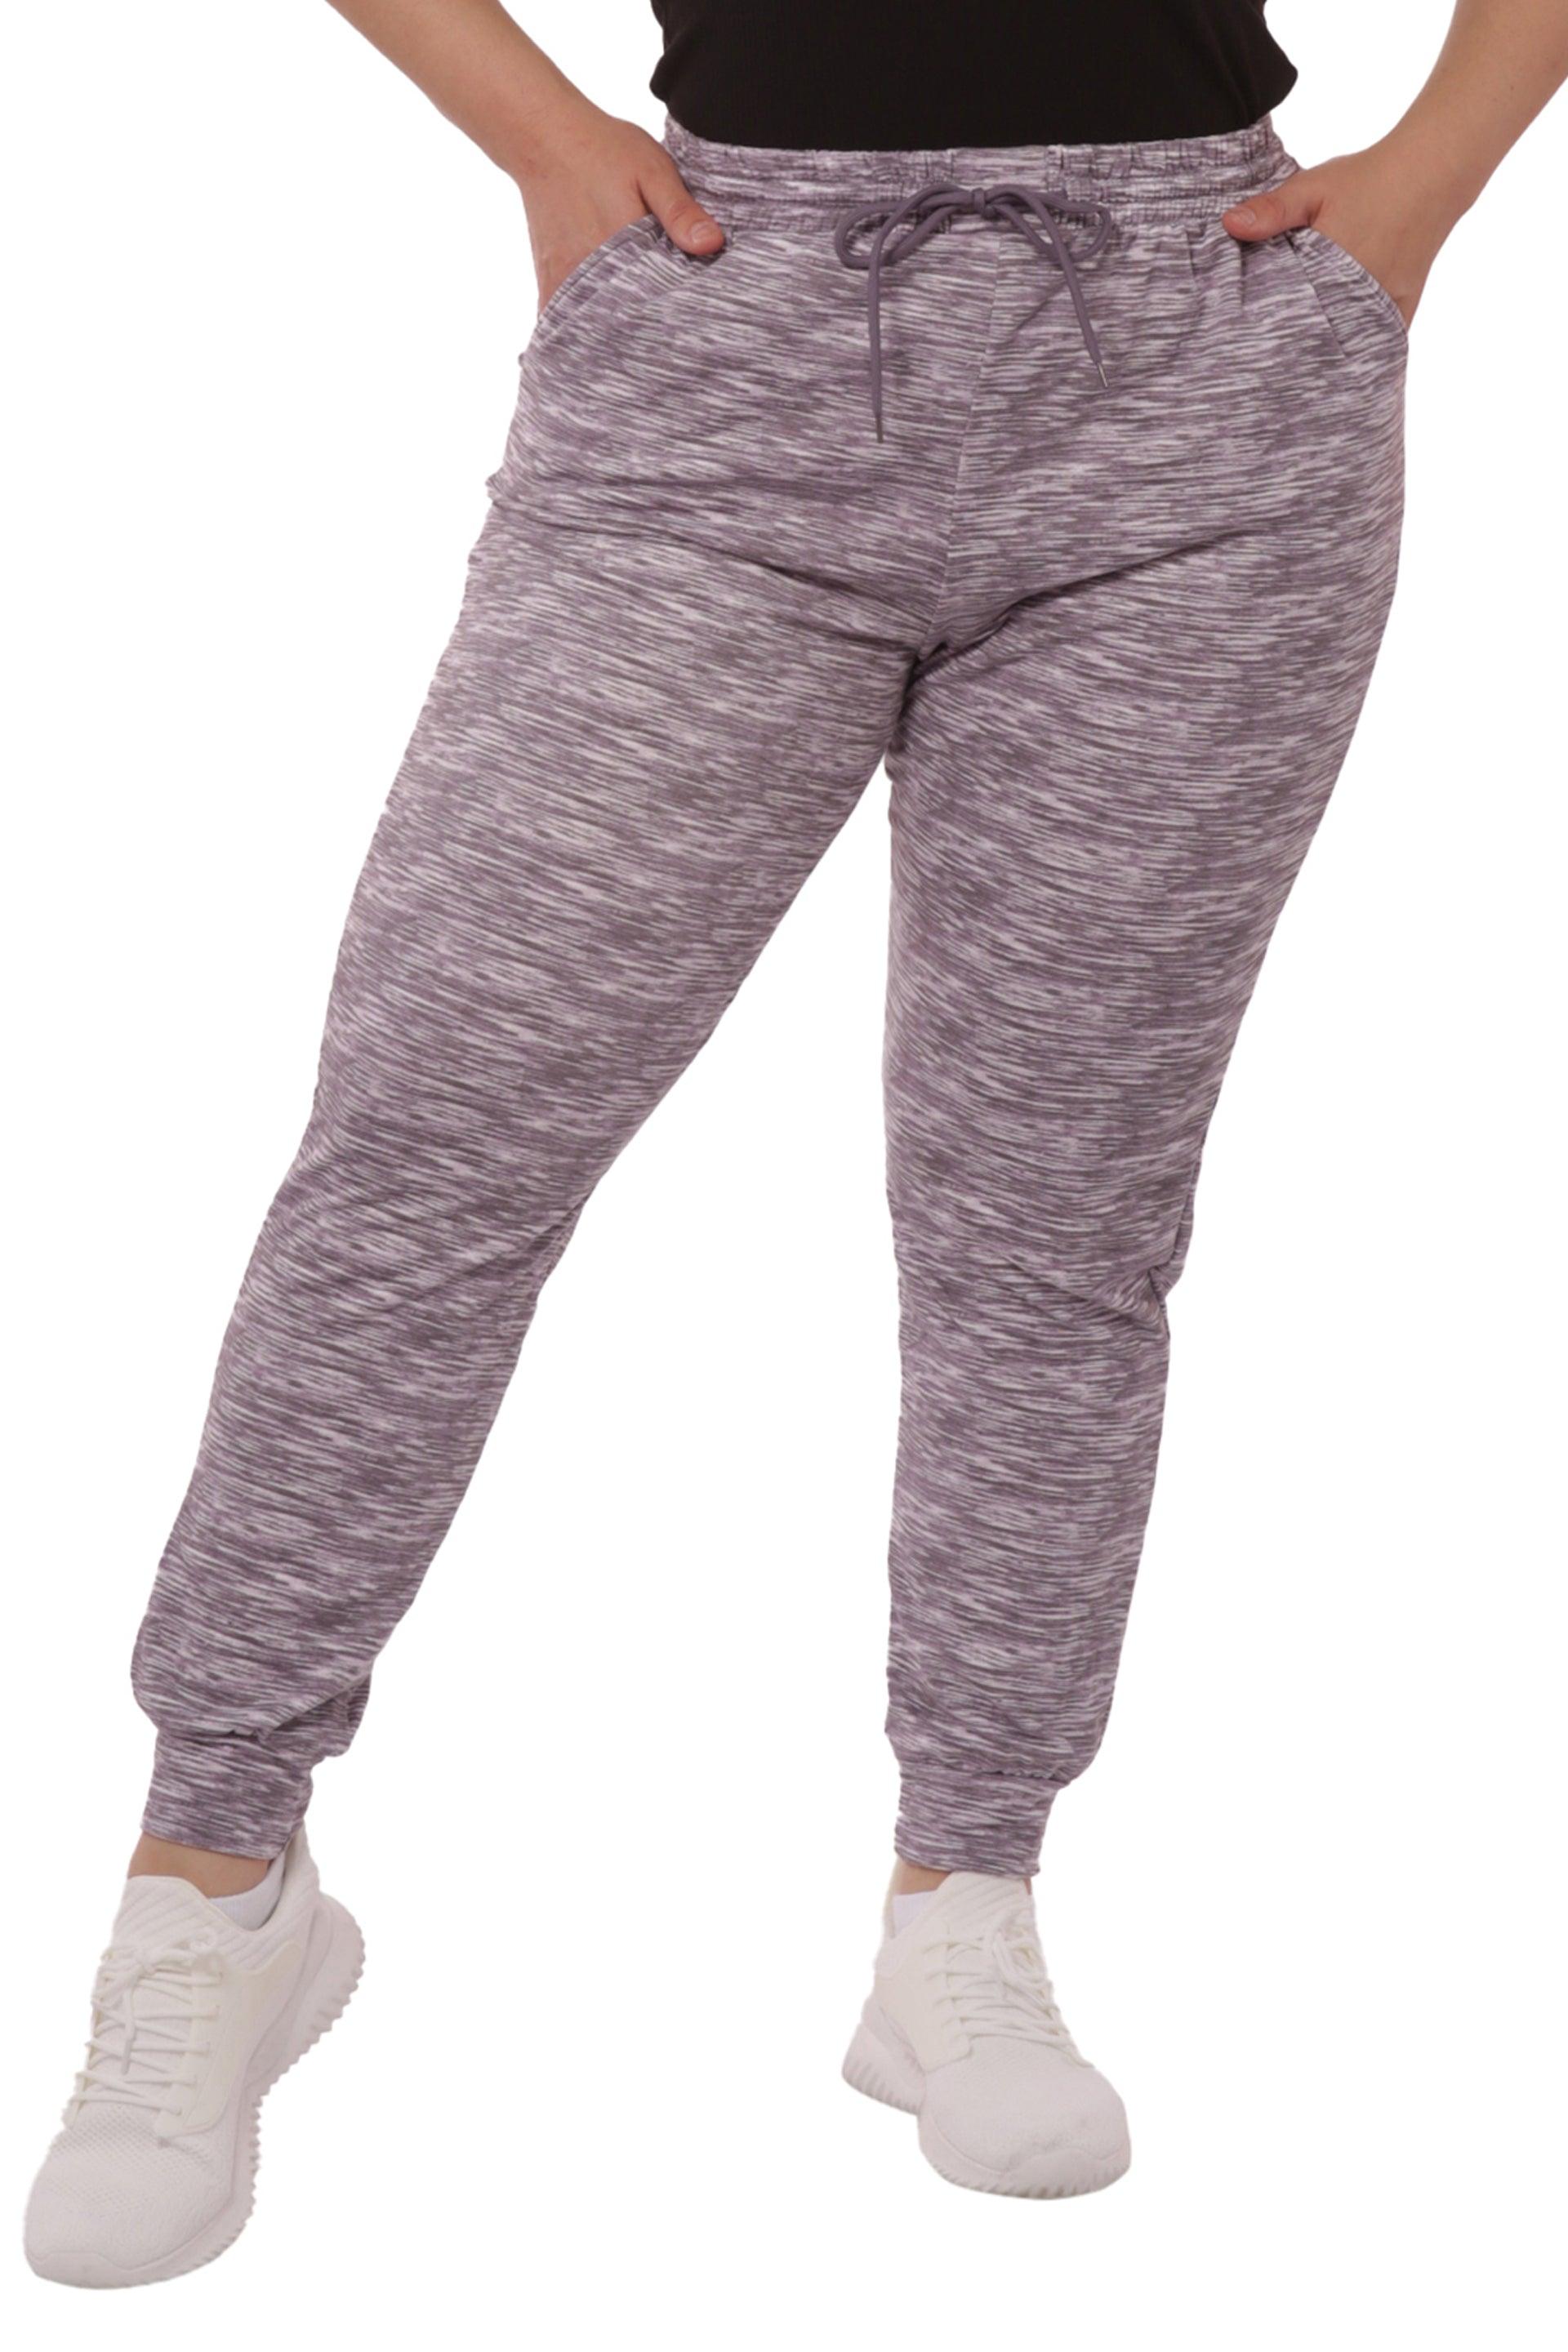 Plus Size Soft Brushed Fleece Lined Sweatpants - Lavender Space Dye - SHOSHO Fashion